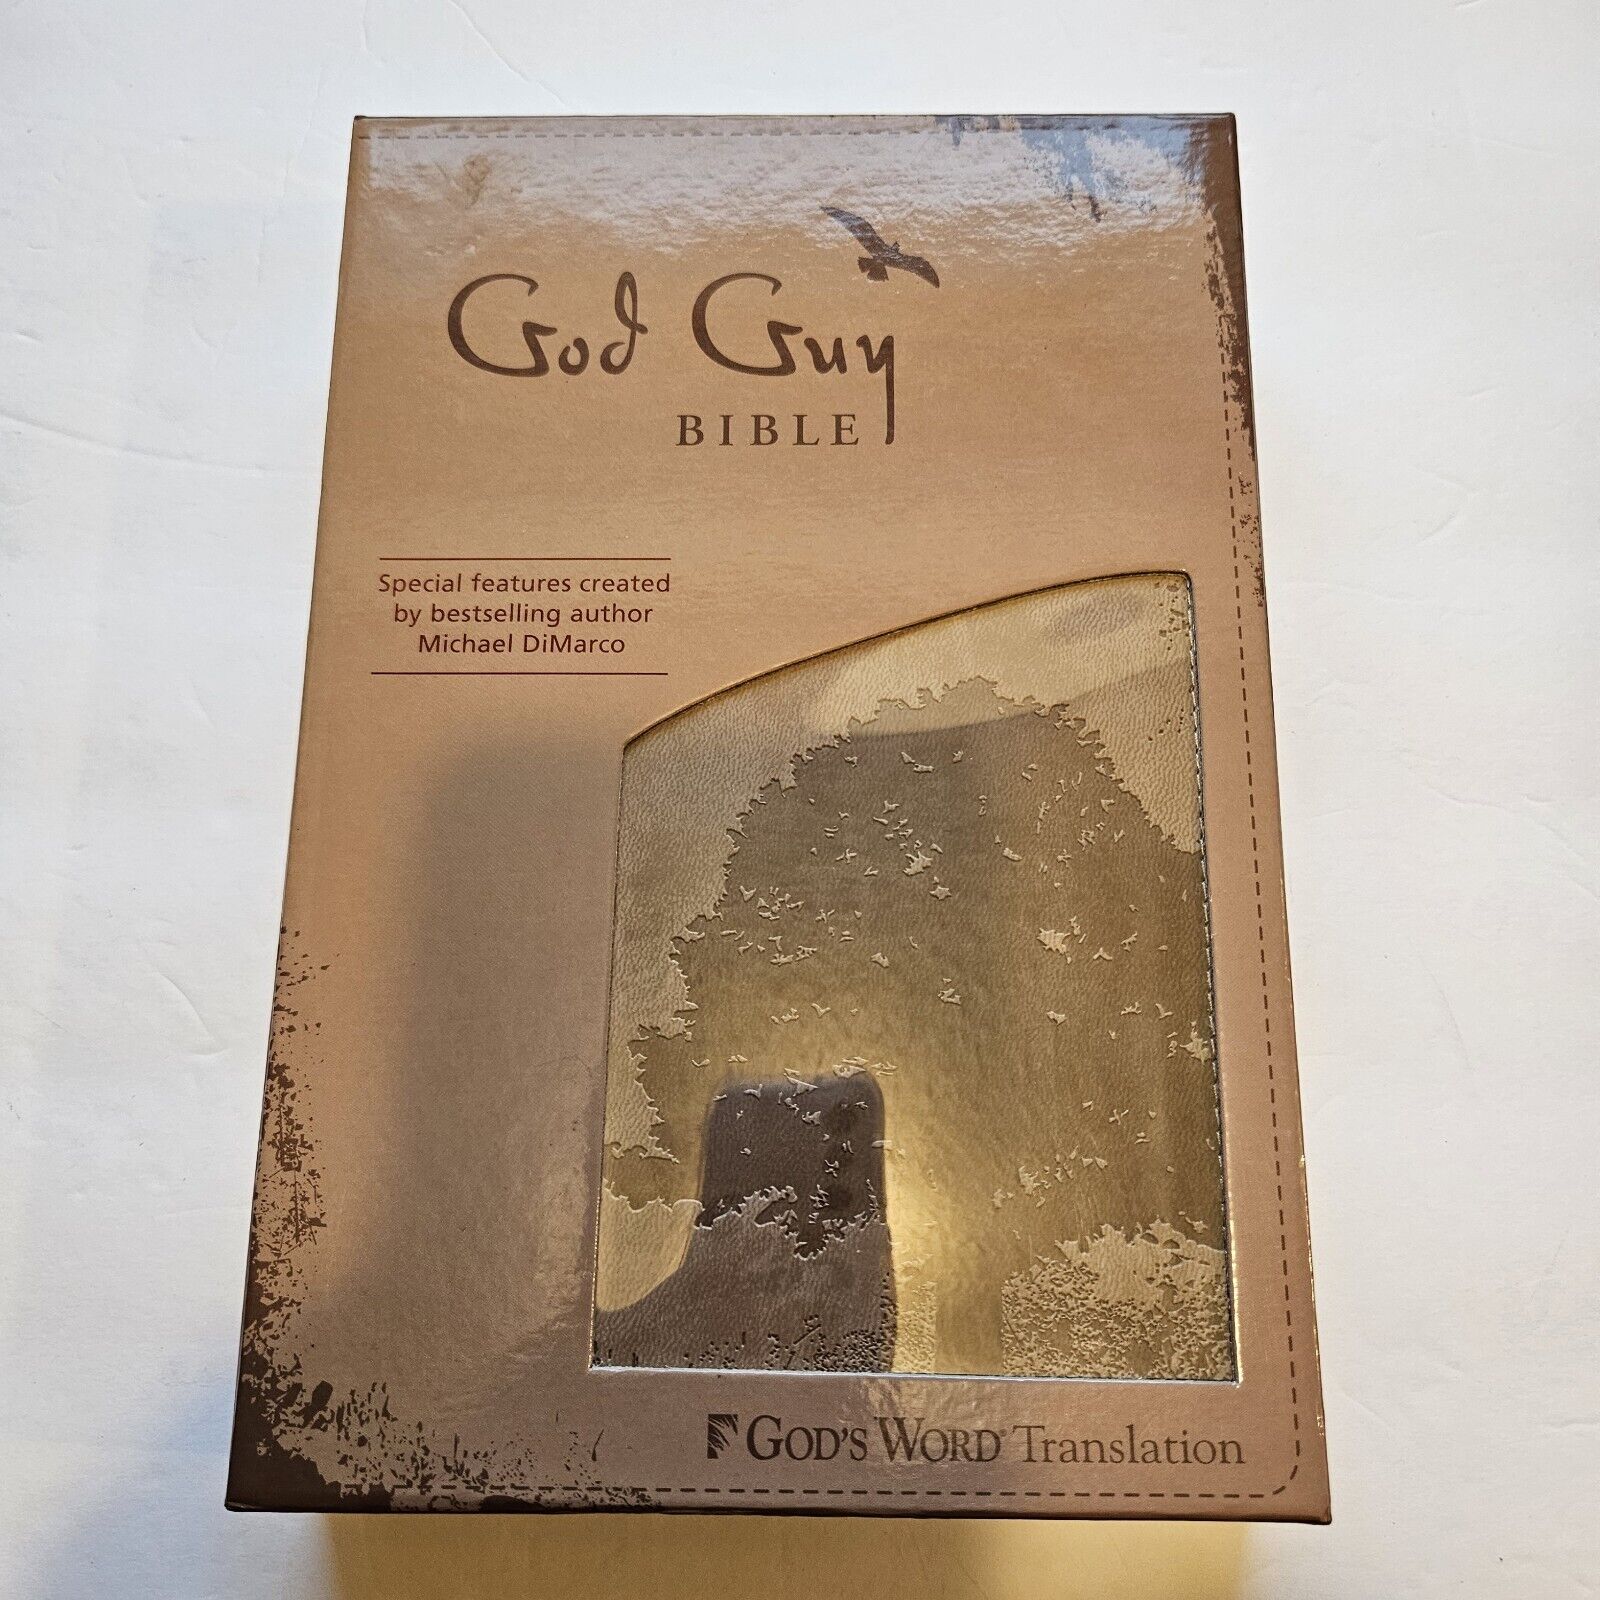 God Guy Bible.  Grunge Tree Design Duravella by Michael DiMarco...